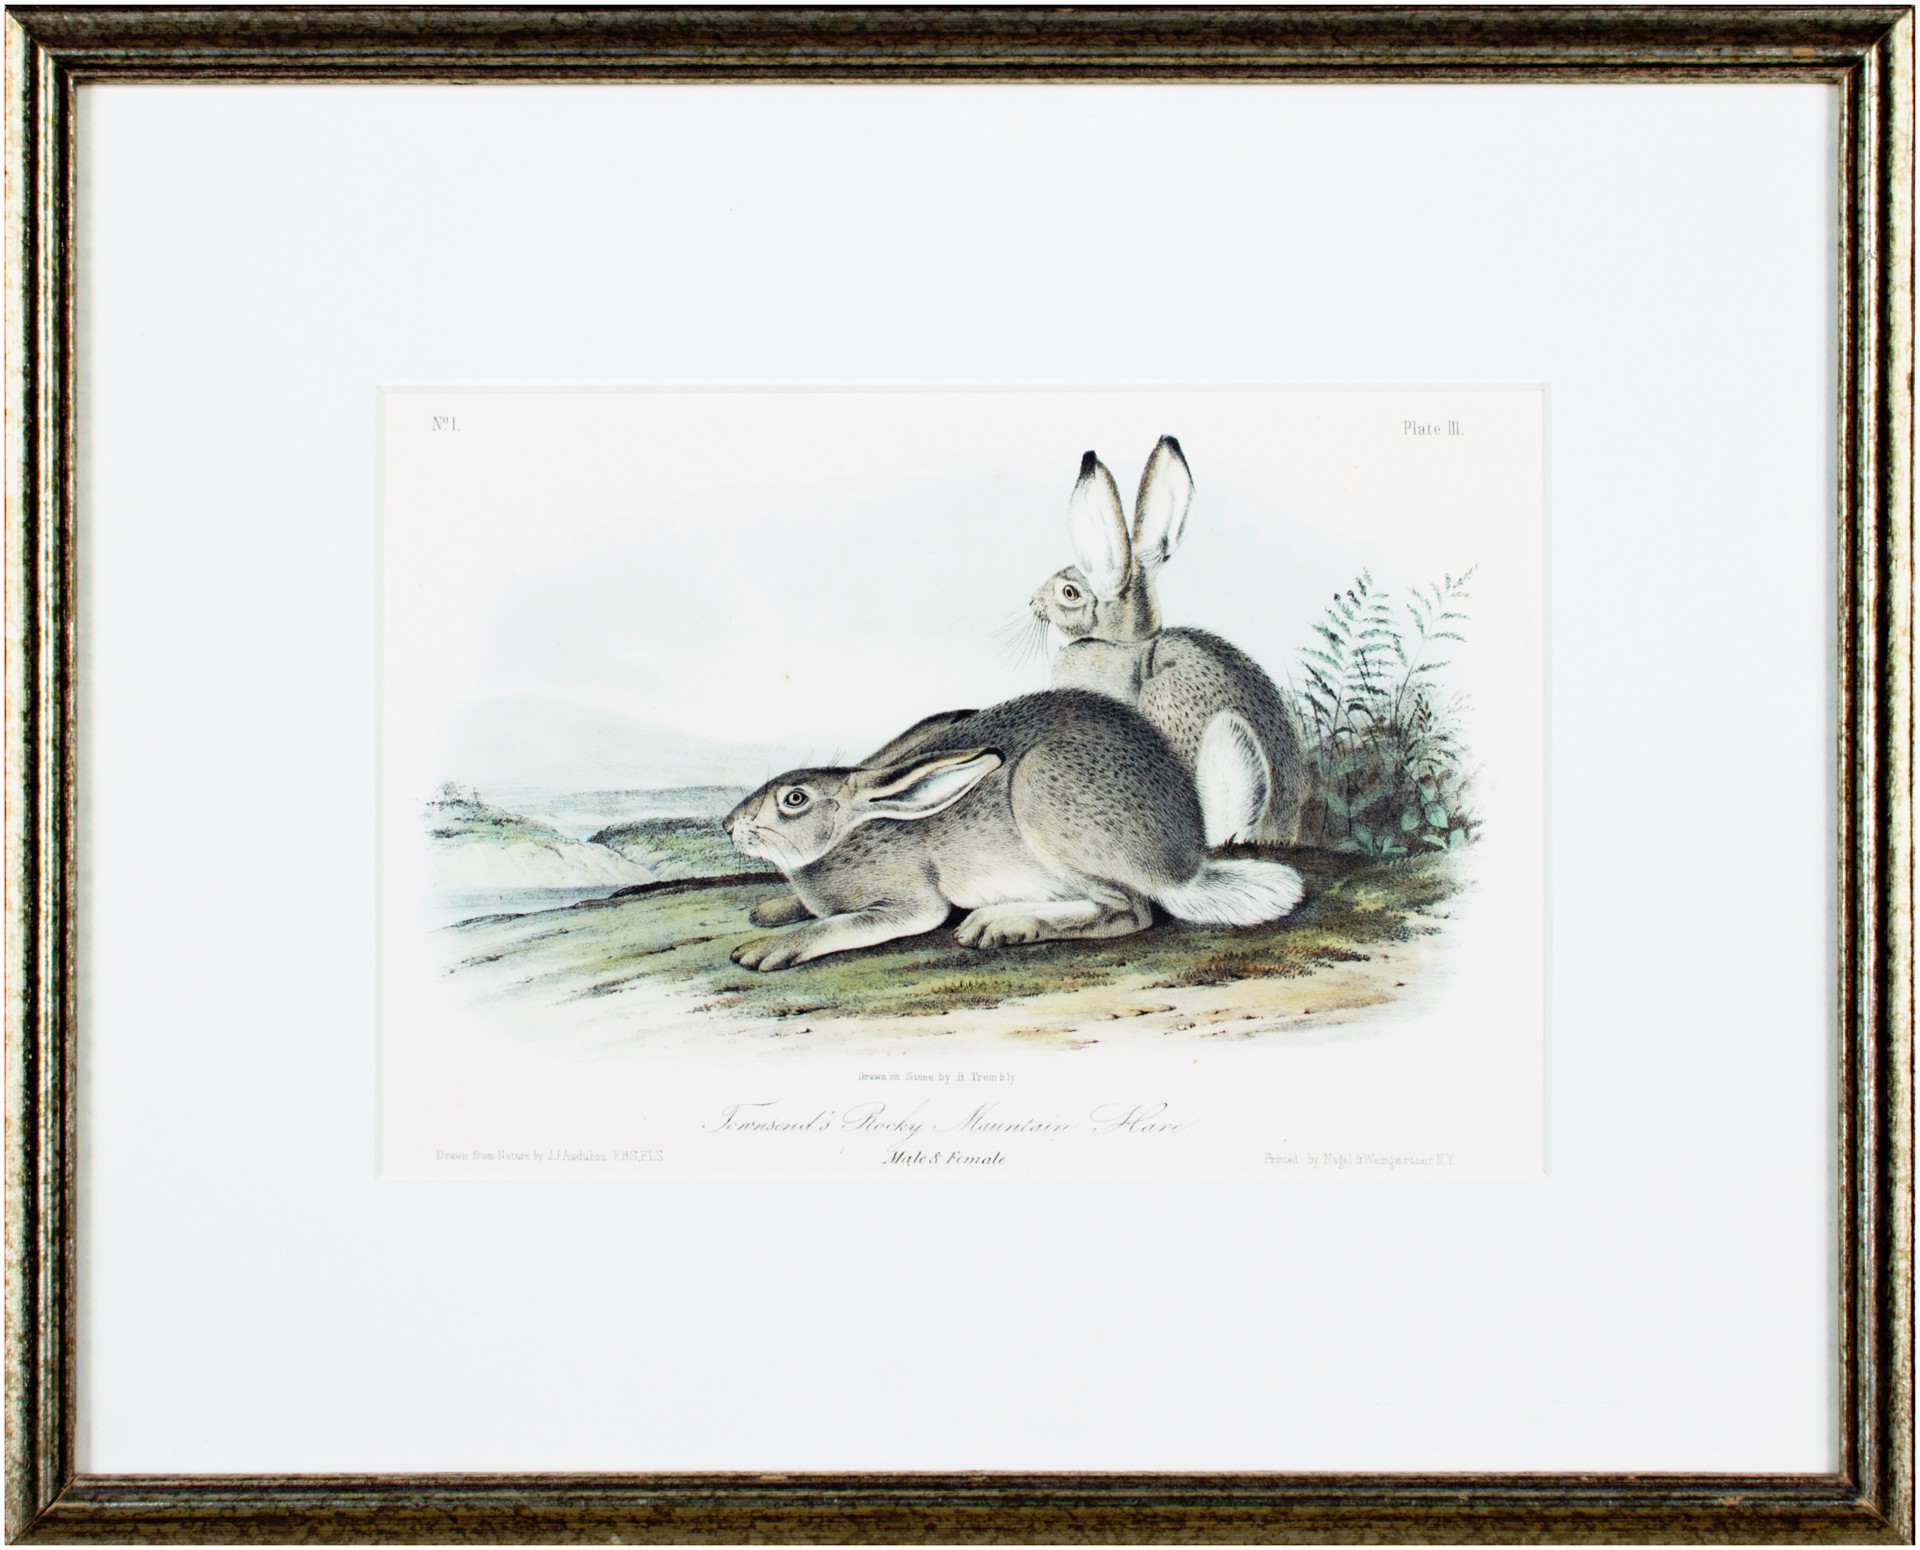 Townsend's Rocky Mountain Hare by John James Audubon